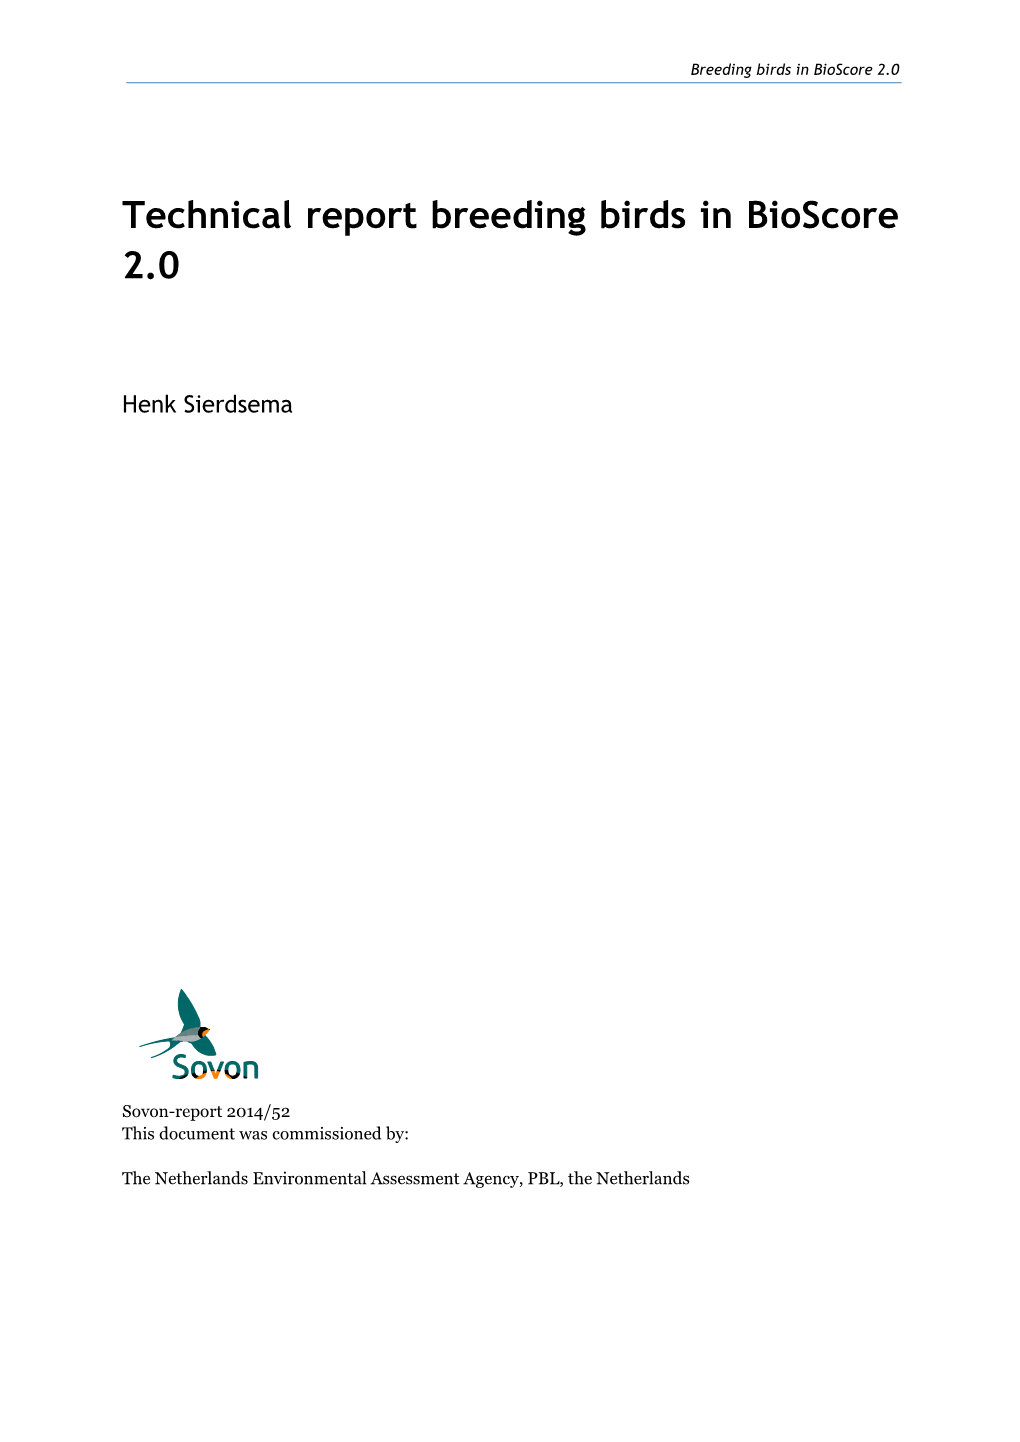 Report on Birds